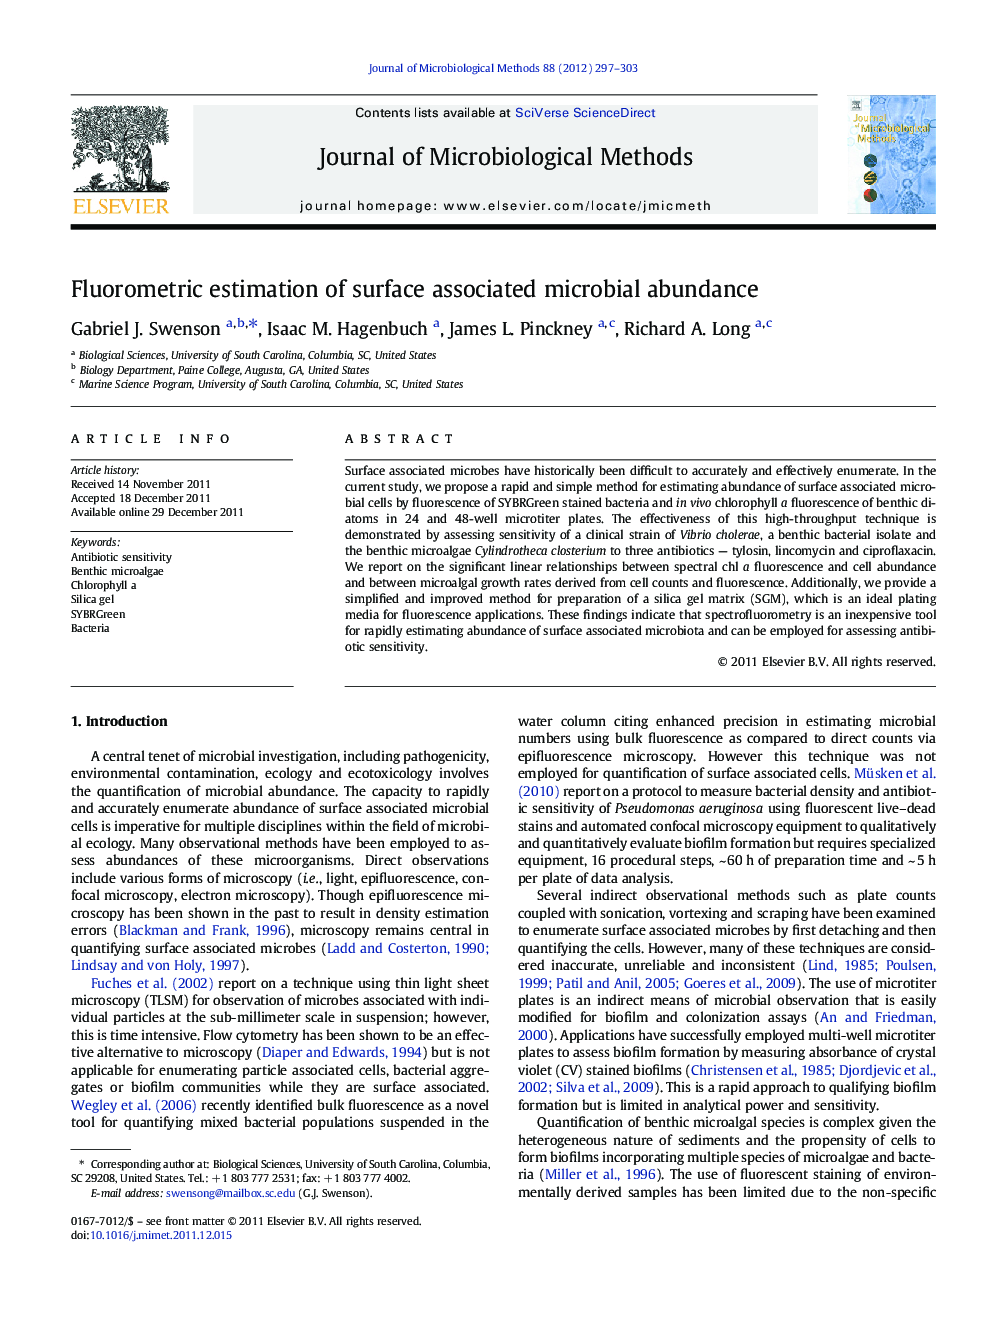 Fluorometric estimation of surface associated microbial abundance